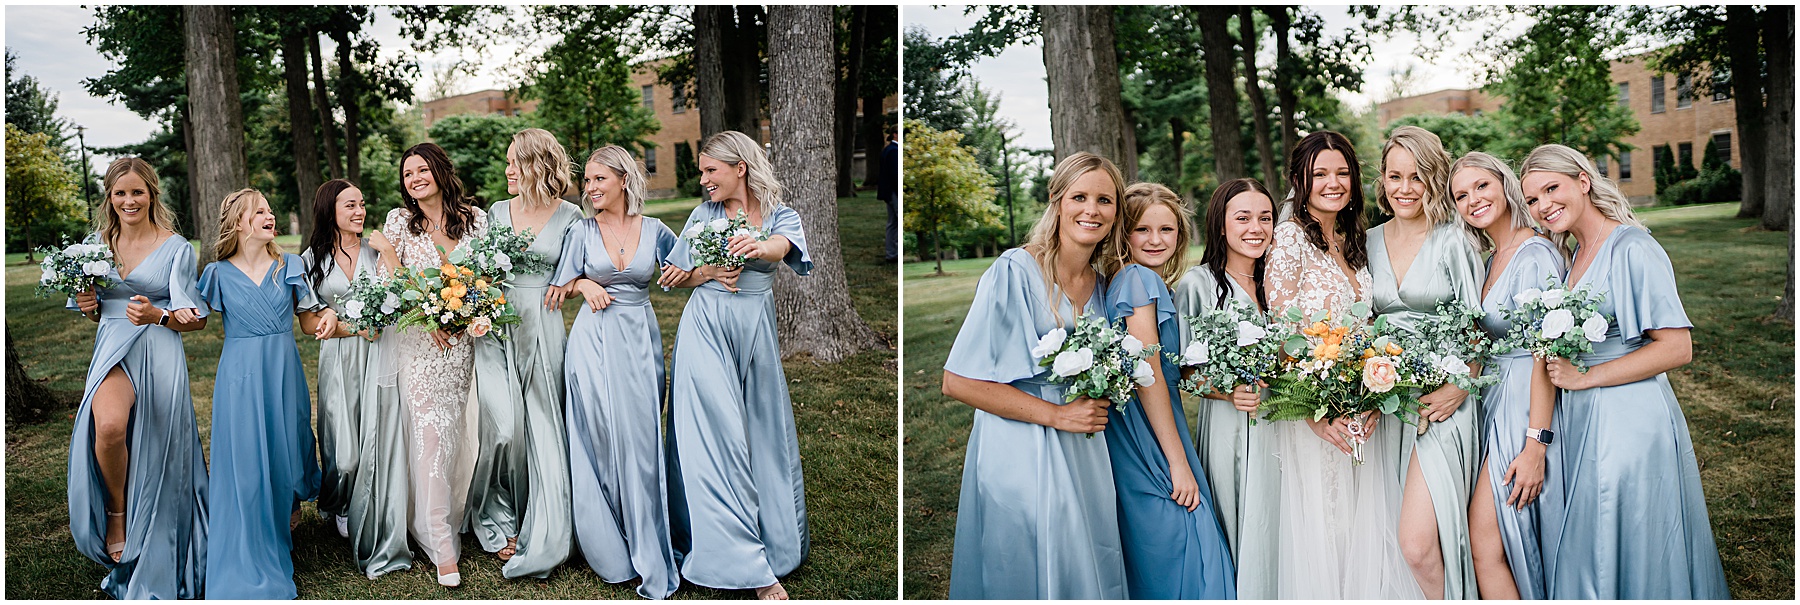 Fort Wayne wedding photographers capture bride walking with bridesmaids through field